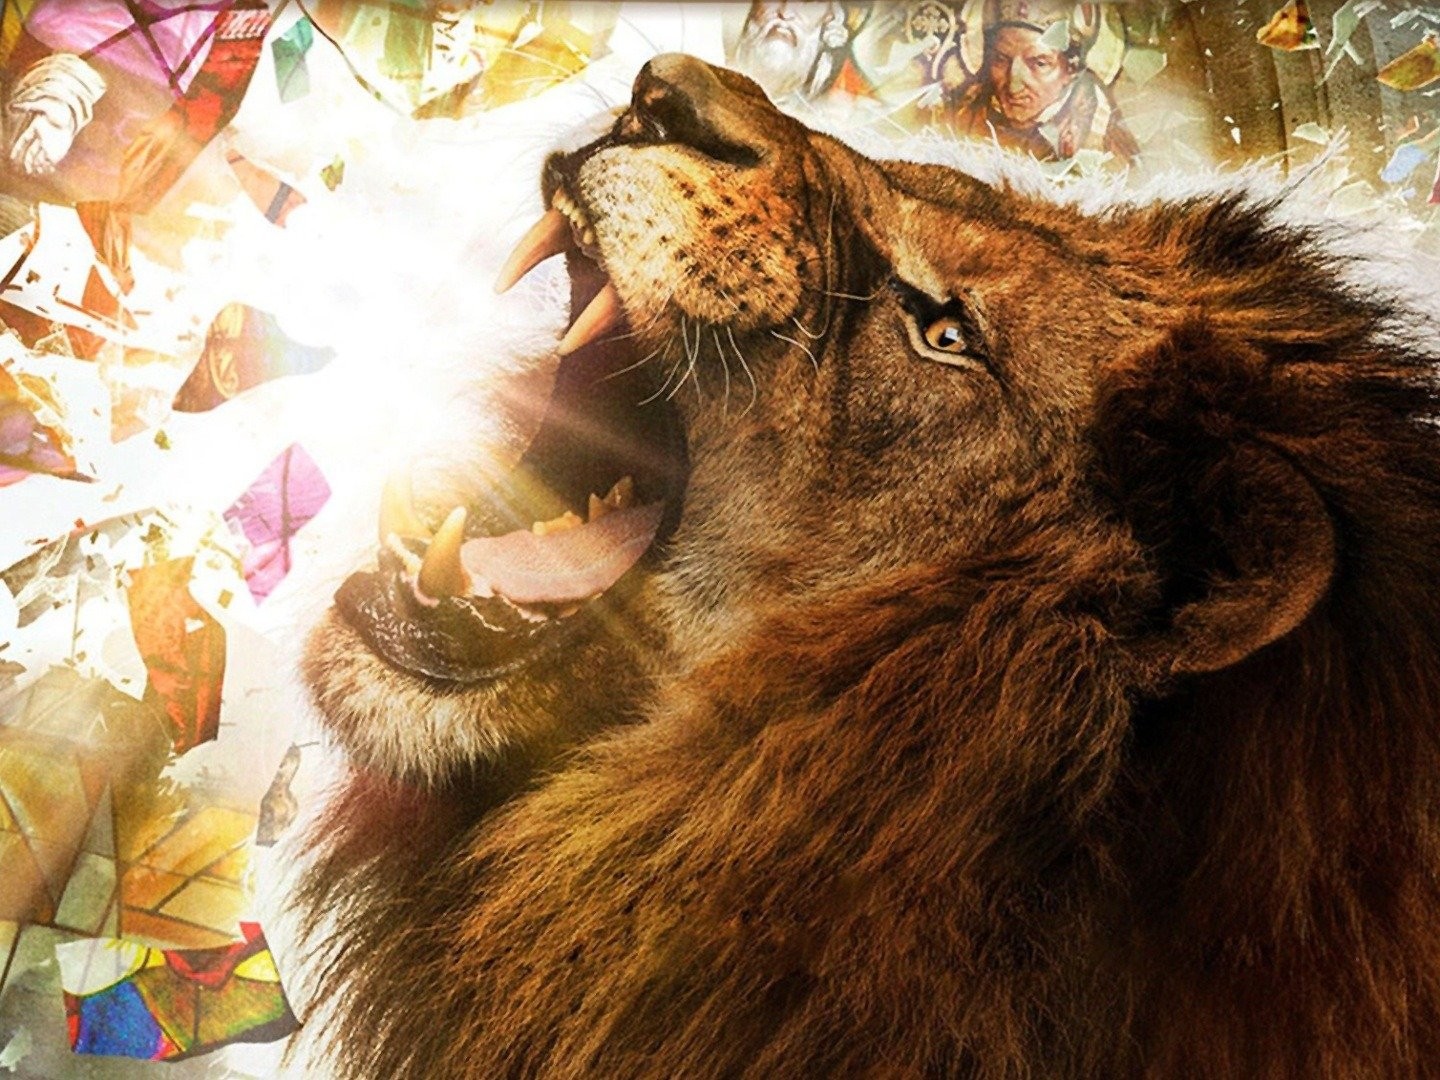 Aslan's Resurrection Romp and Roar